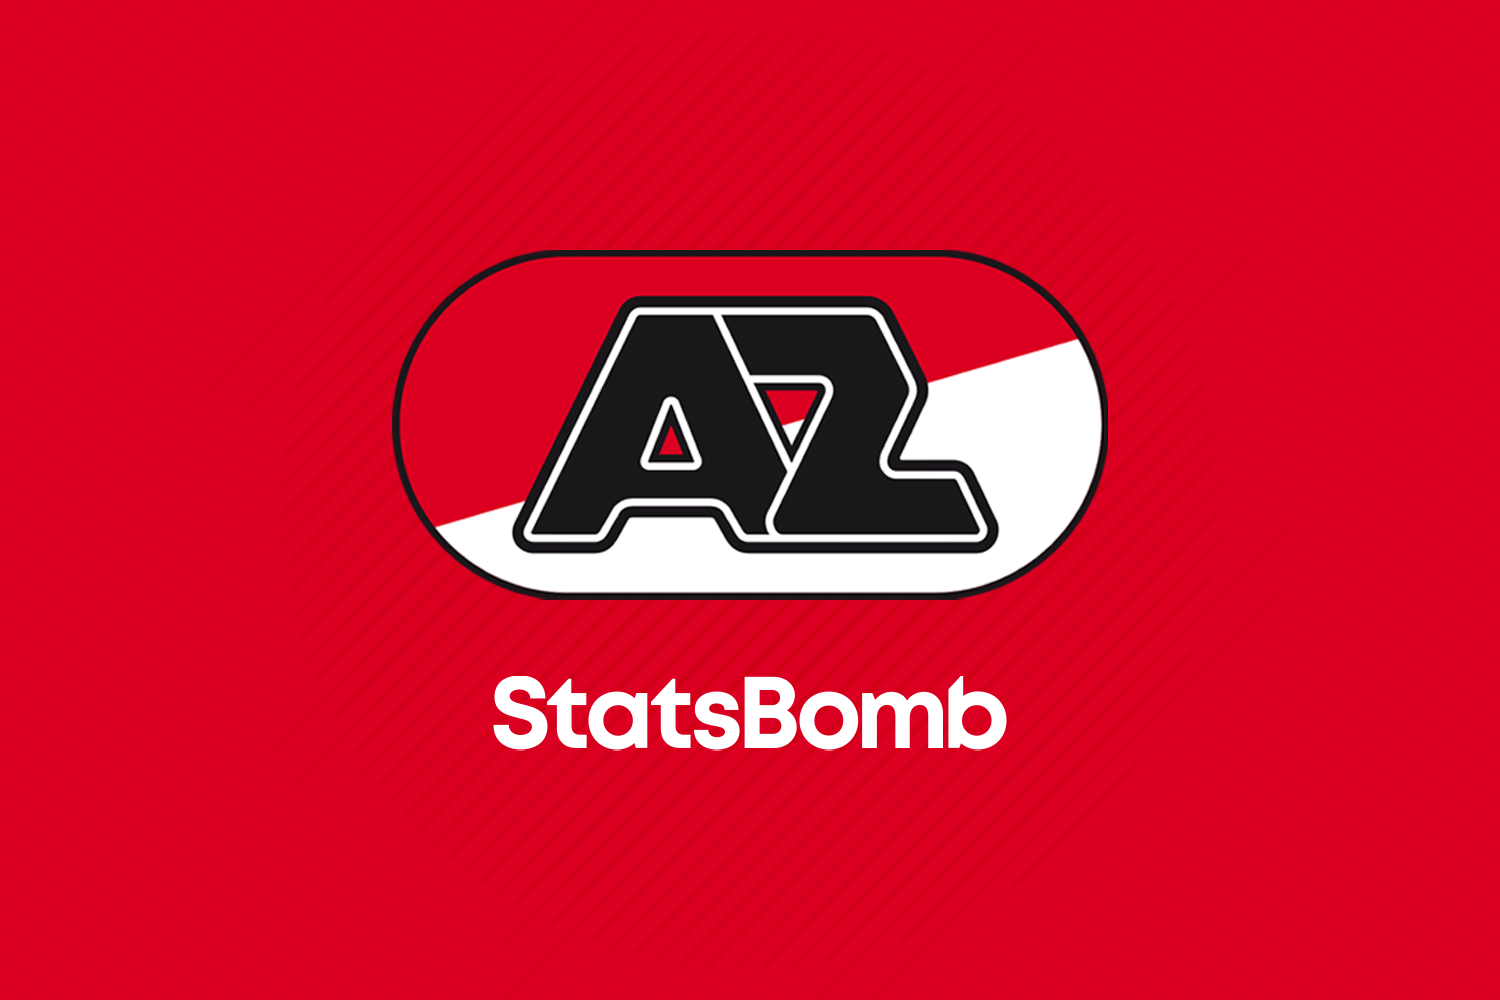 StatsBomb Strengthens Presence In The Dutch Market With AZ Alkmaar Renewed Partnership